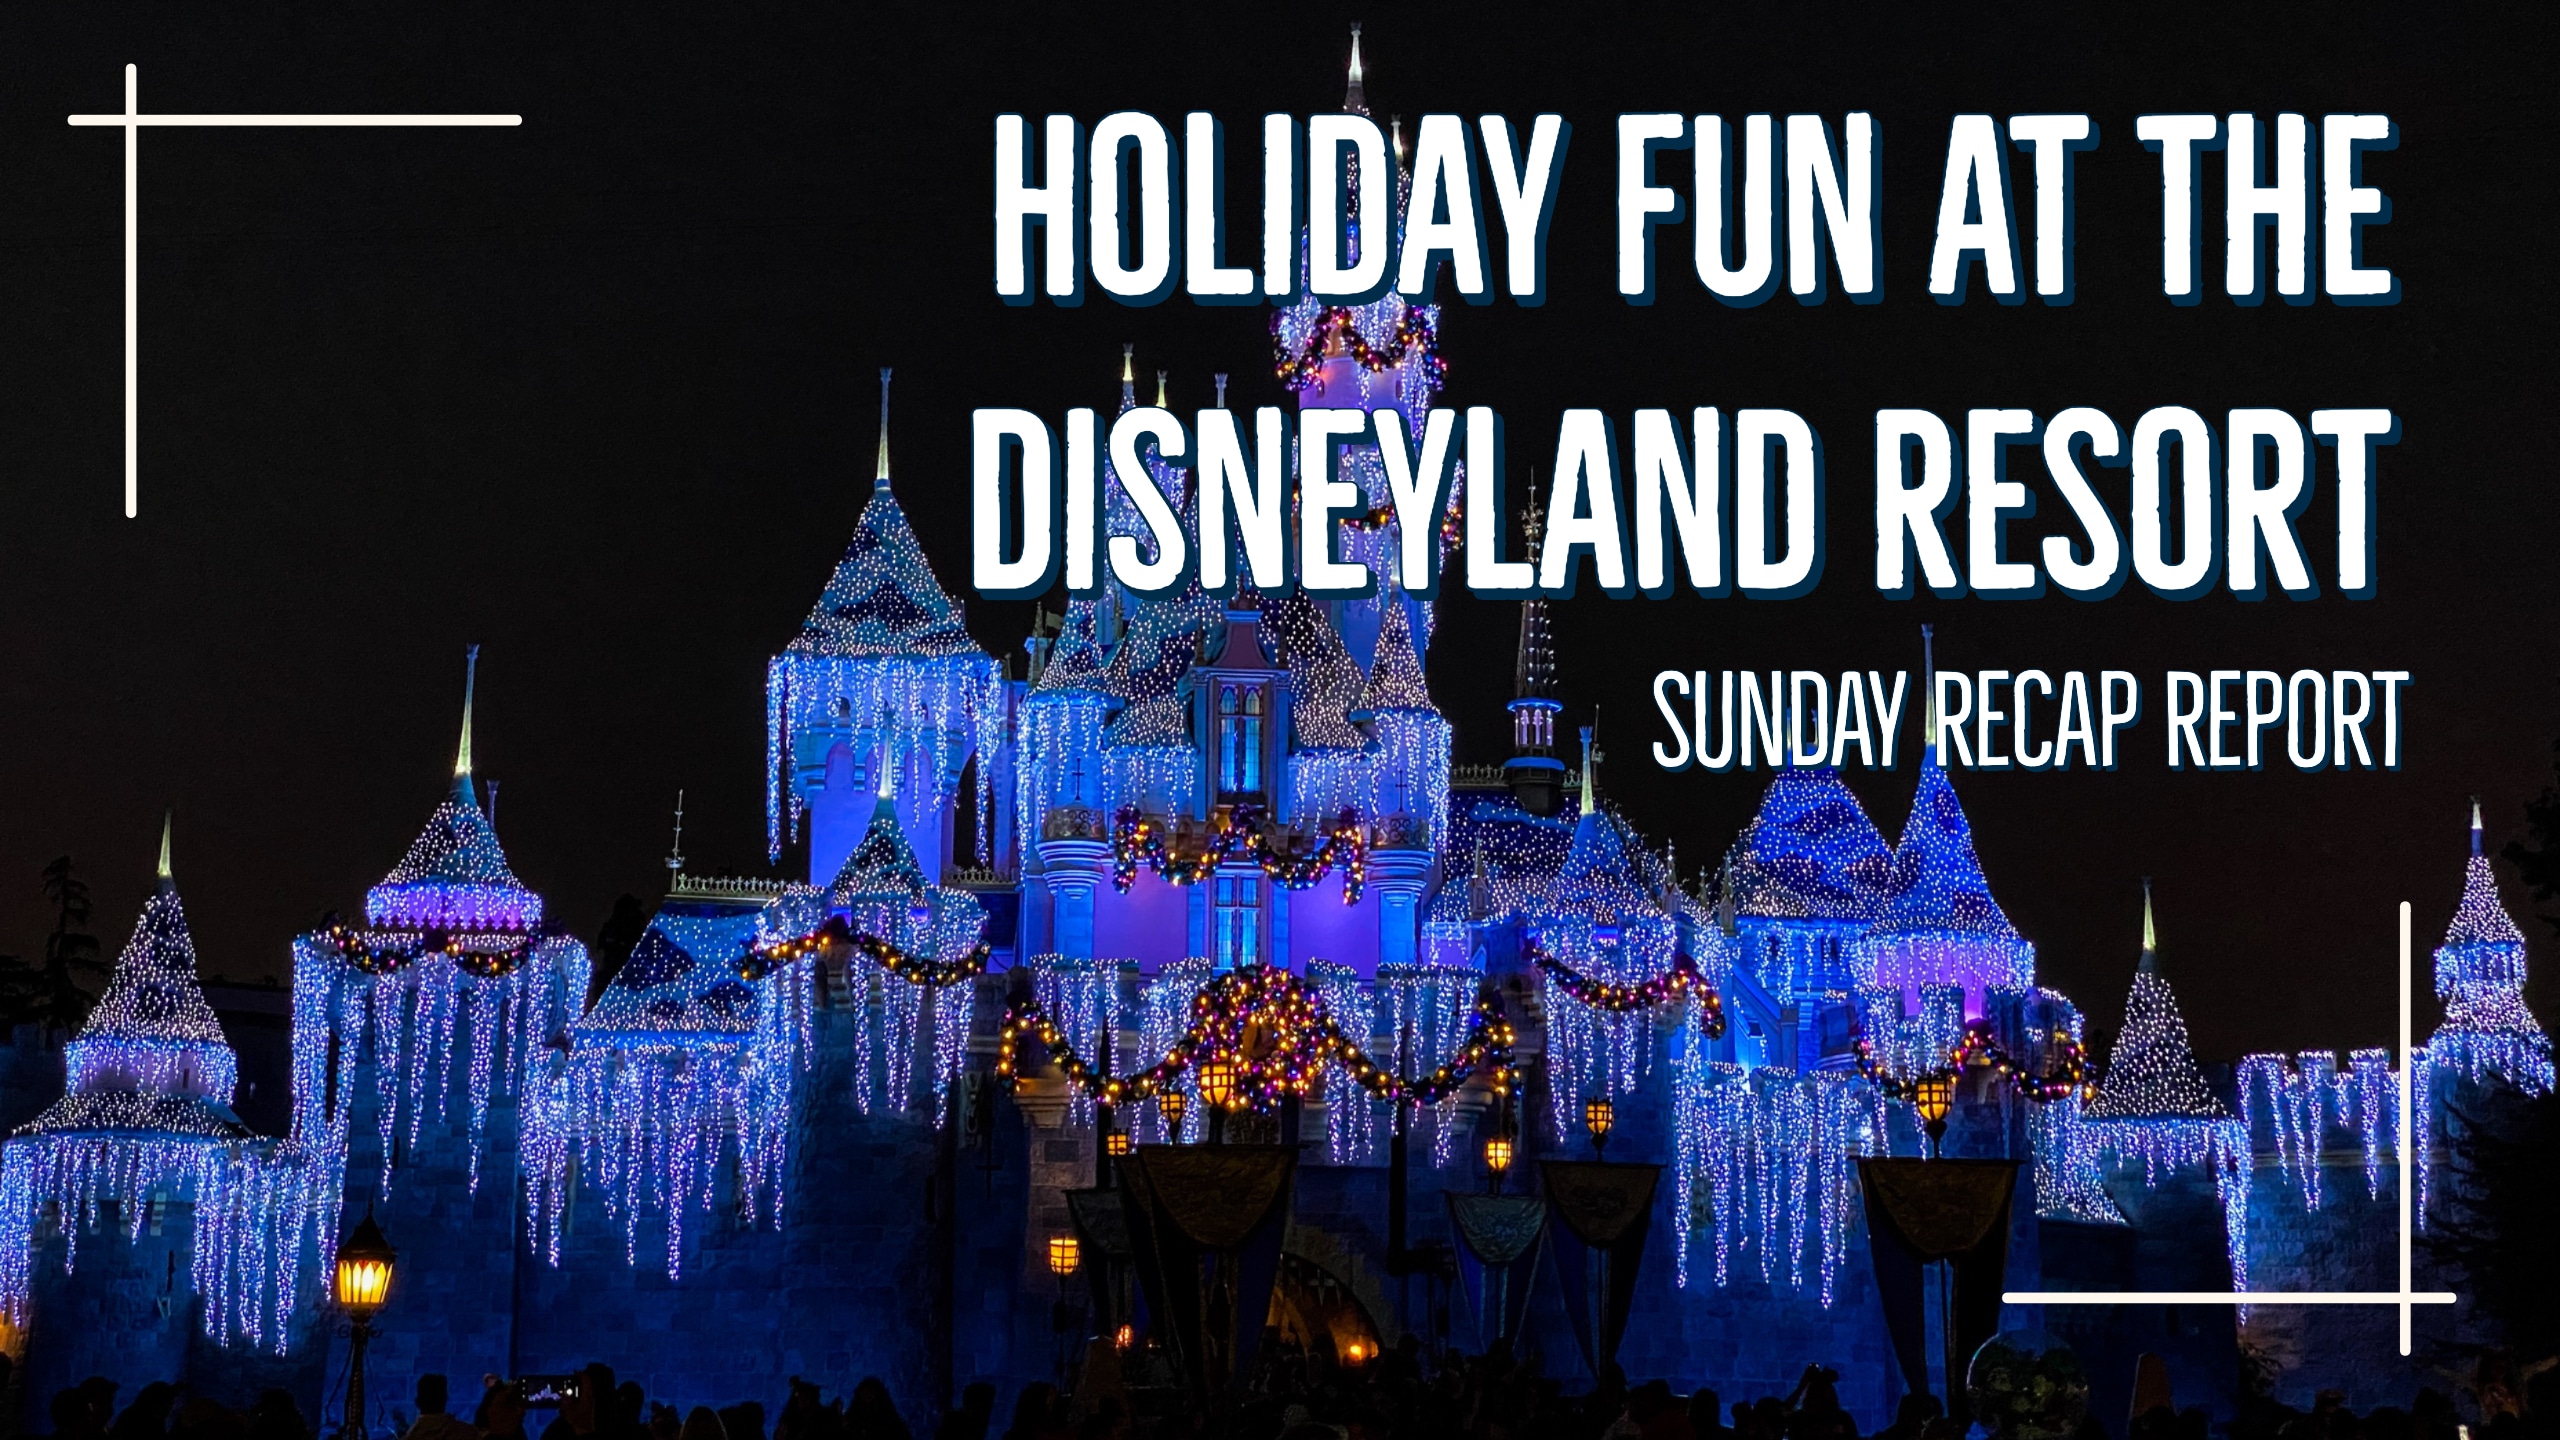 Sunday Recap Report – Holiday Fun at the Disneyland Resort